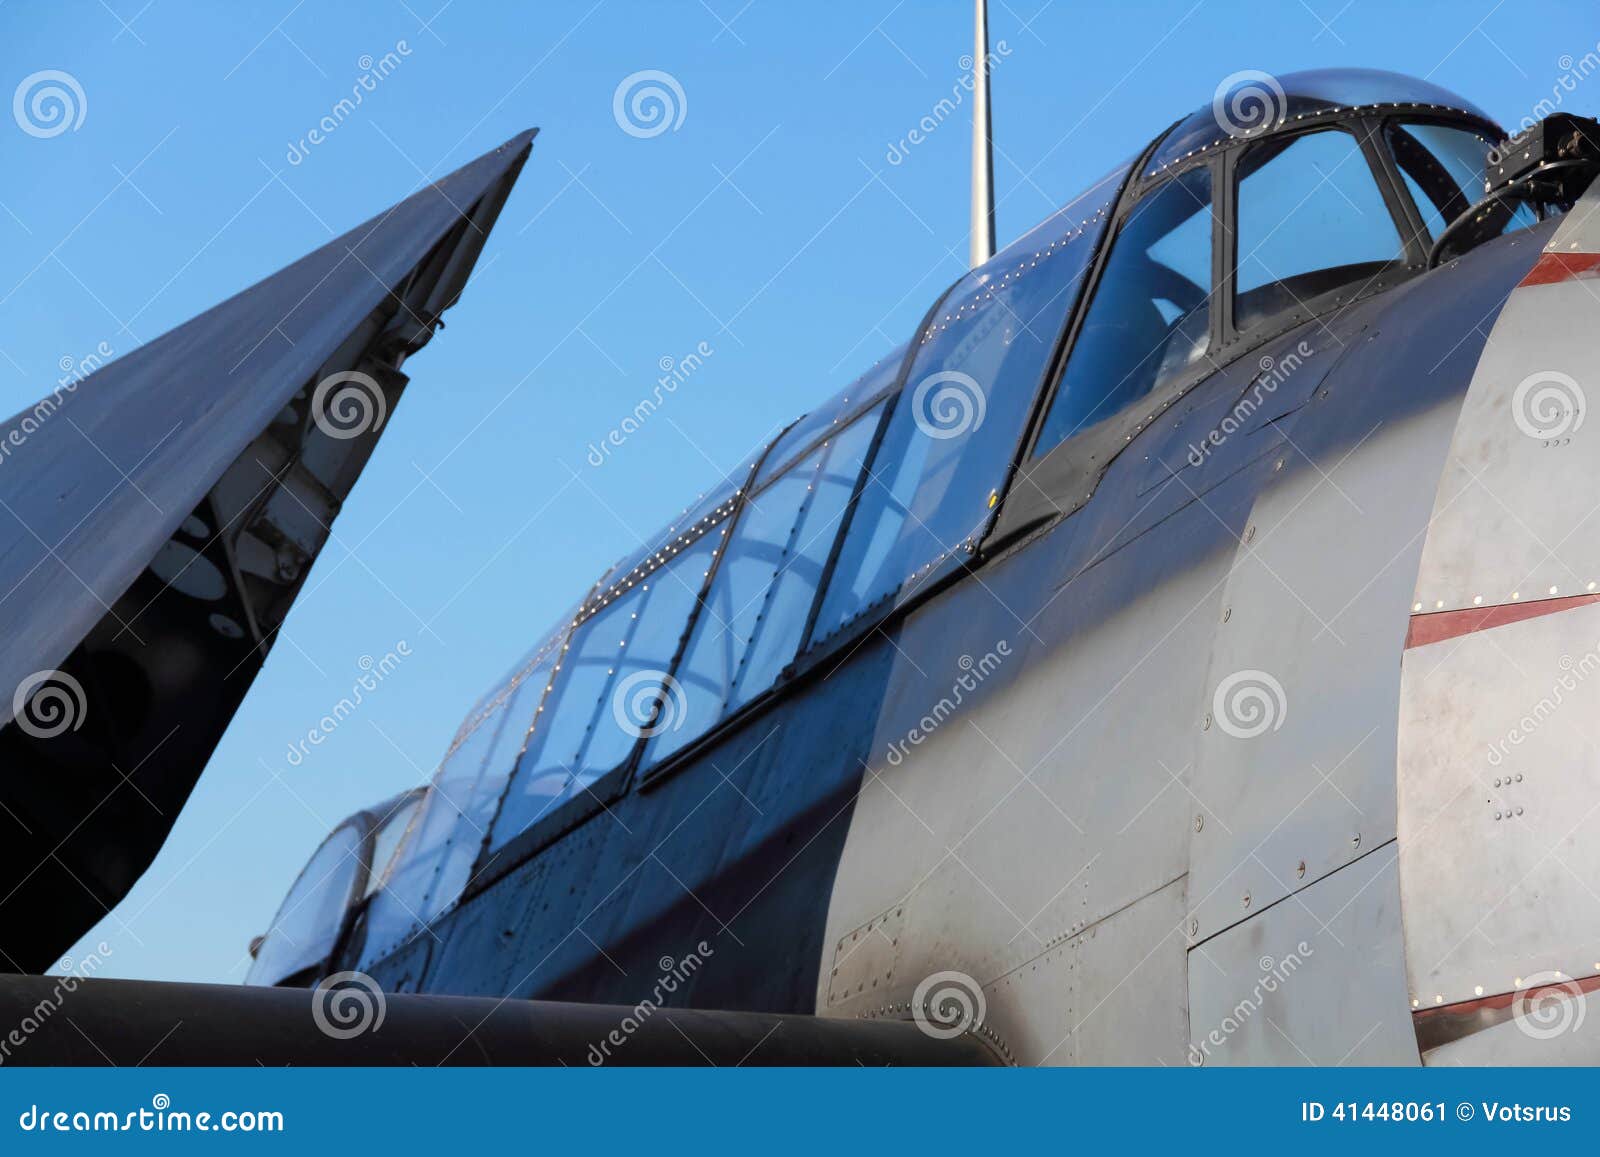 avenger warbird fuselage